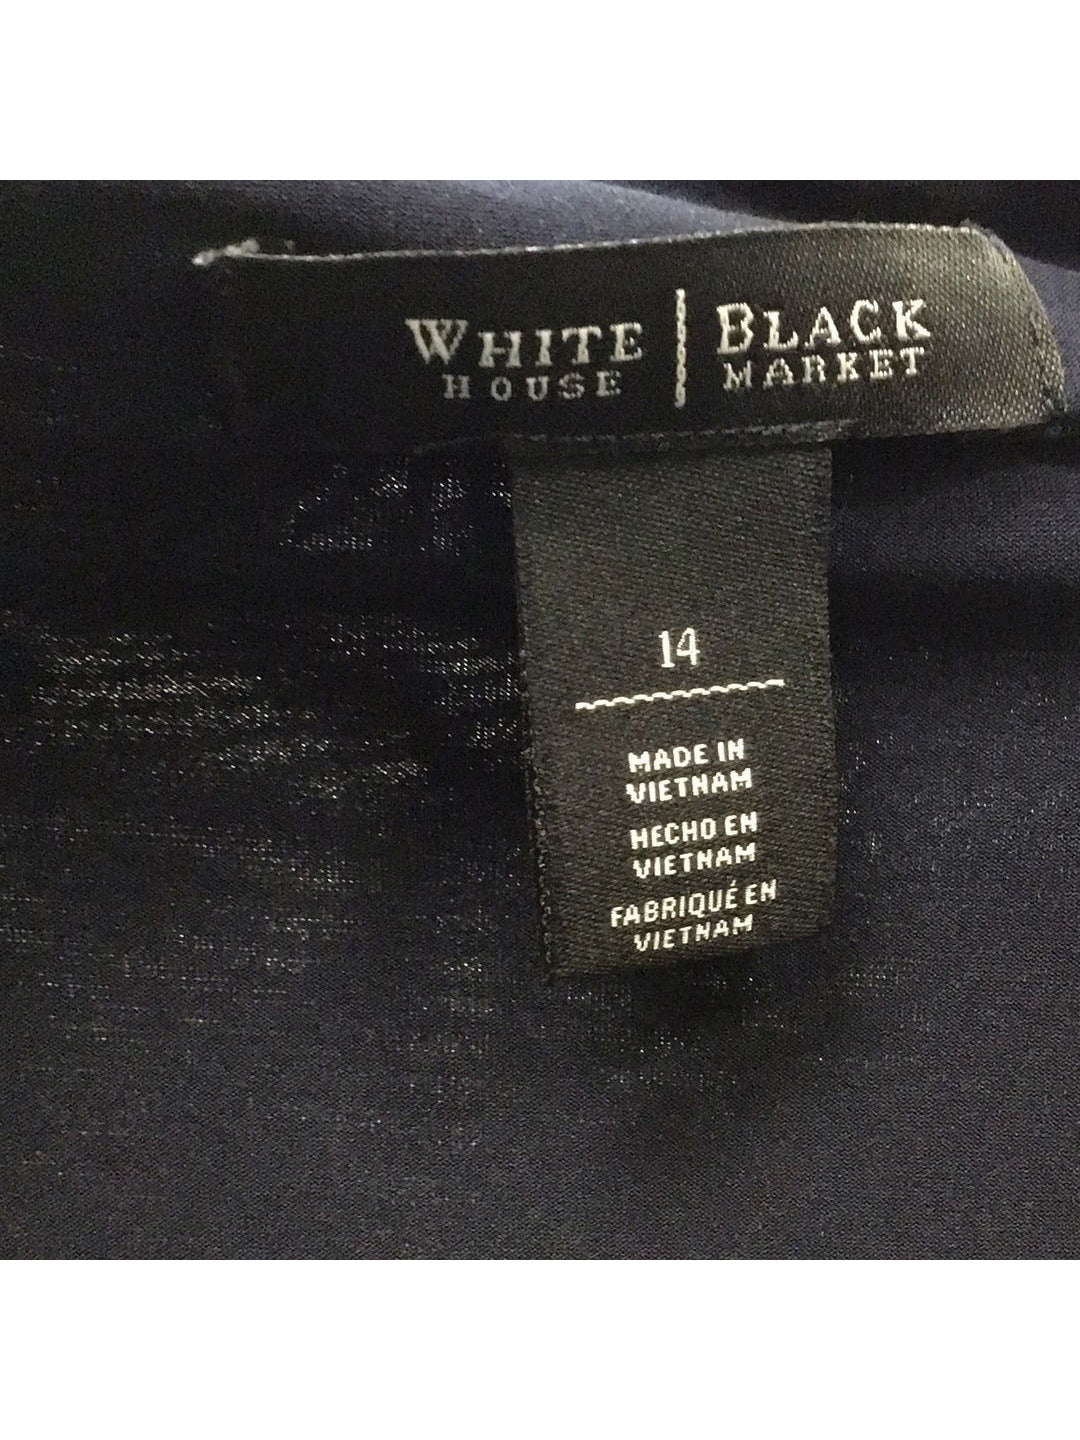 White House Black Market Dress Dark Blue Women's 14 - The Kennedy Collective Thrift - 